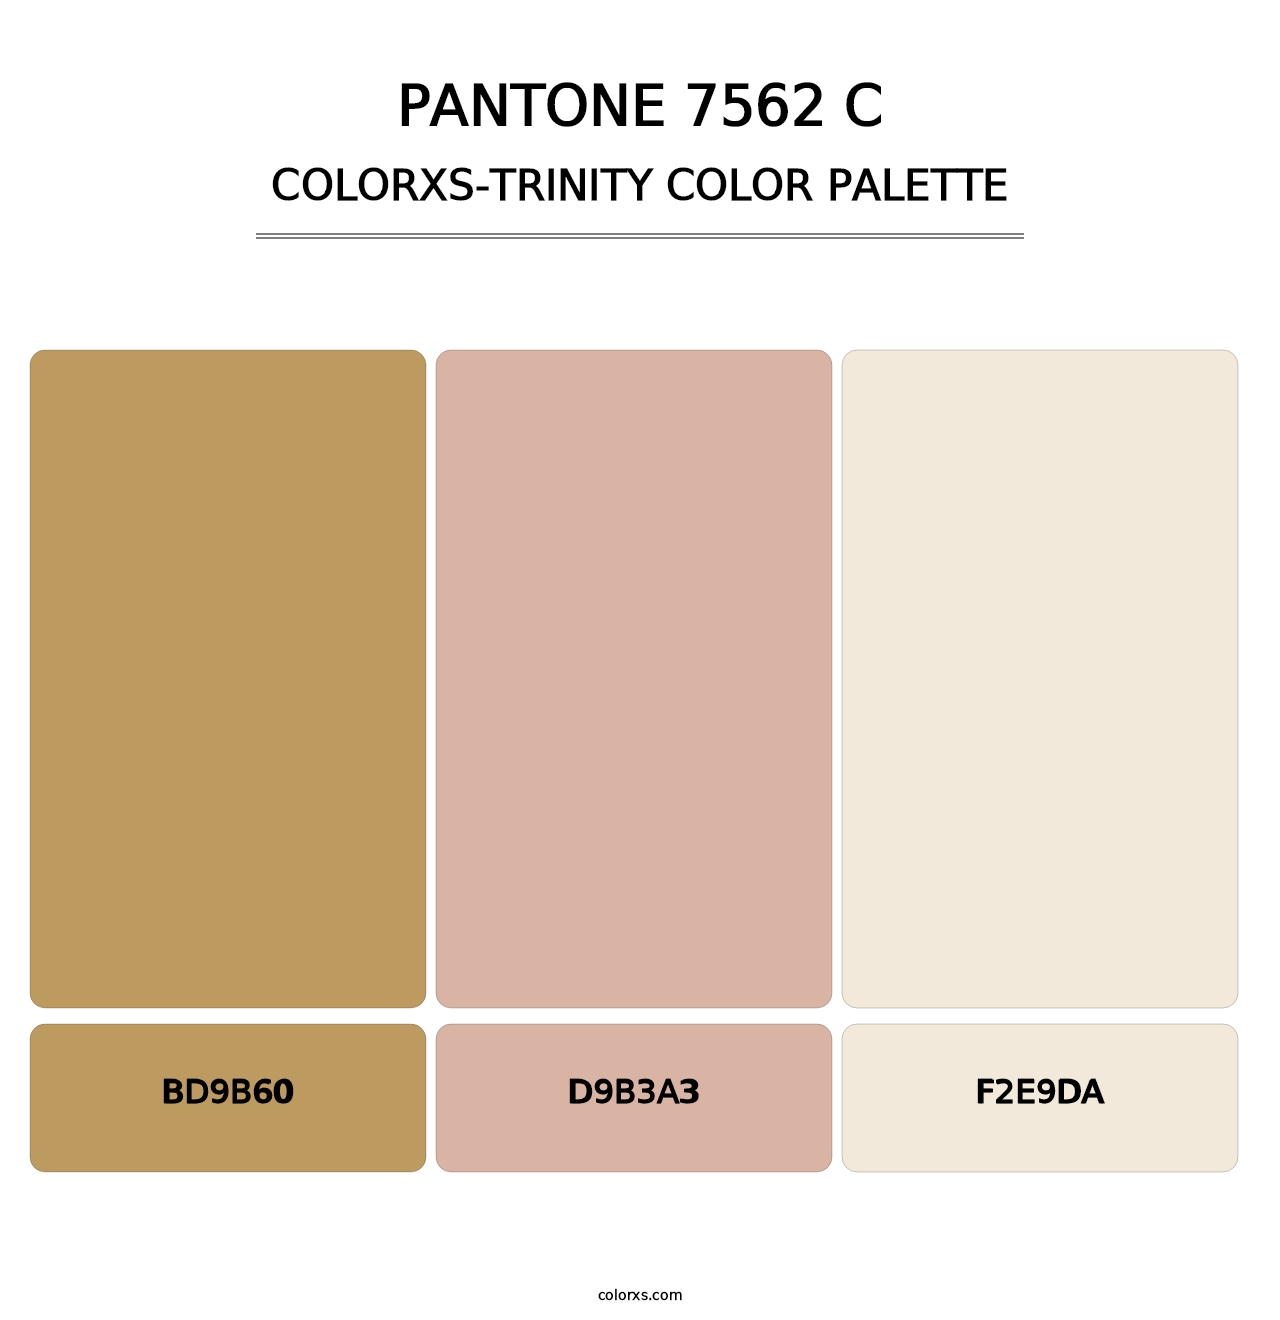 PANTONE 7562 C - Colorxs Trinity Palette